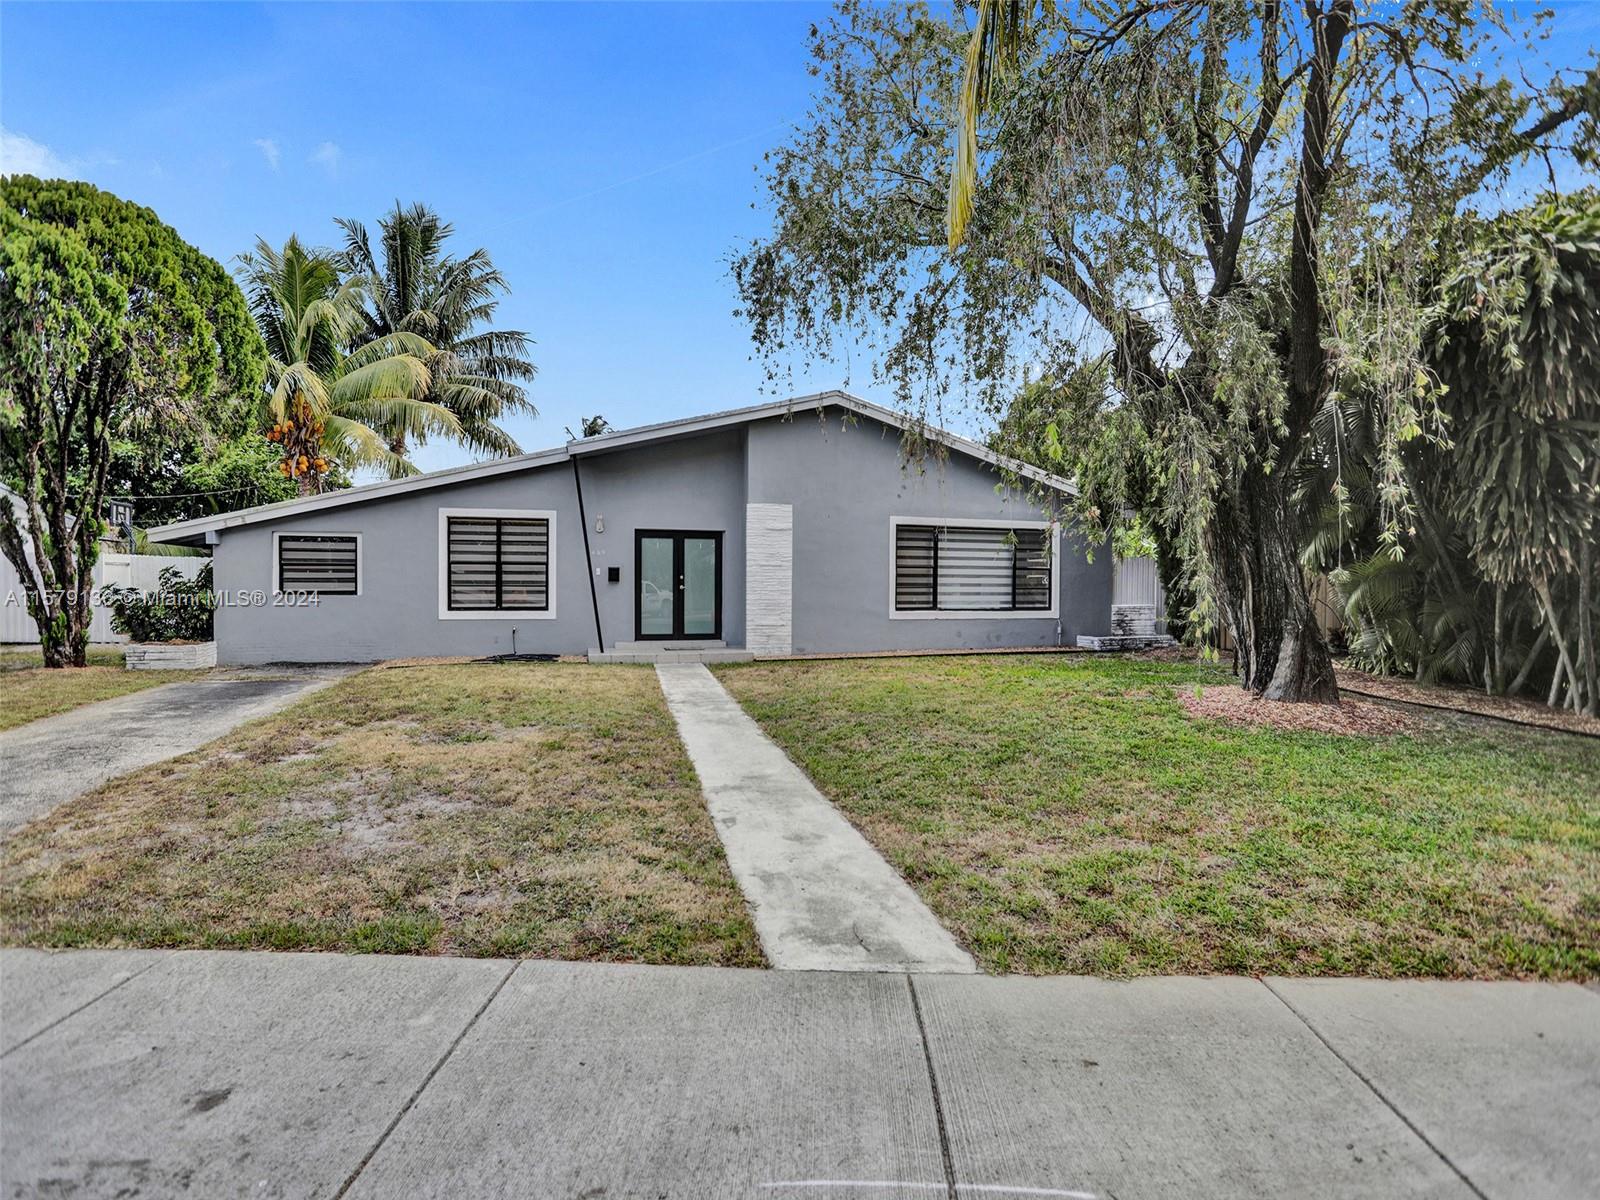 Property for Sale at 460 Ne 178th St, North Miami Beach, Miami-Dade County, Florida - Bedrooms: 4 
Bathrooms: 2  - $859,000